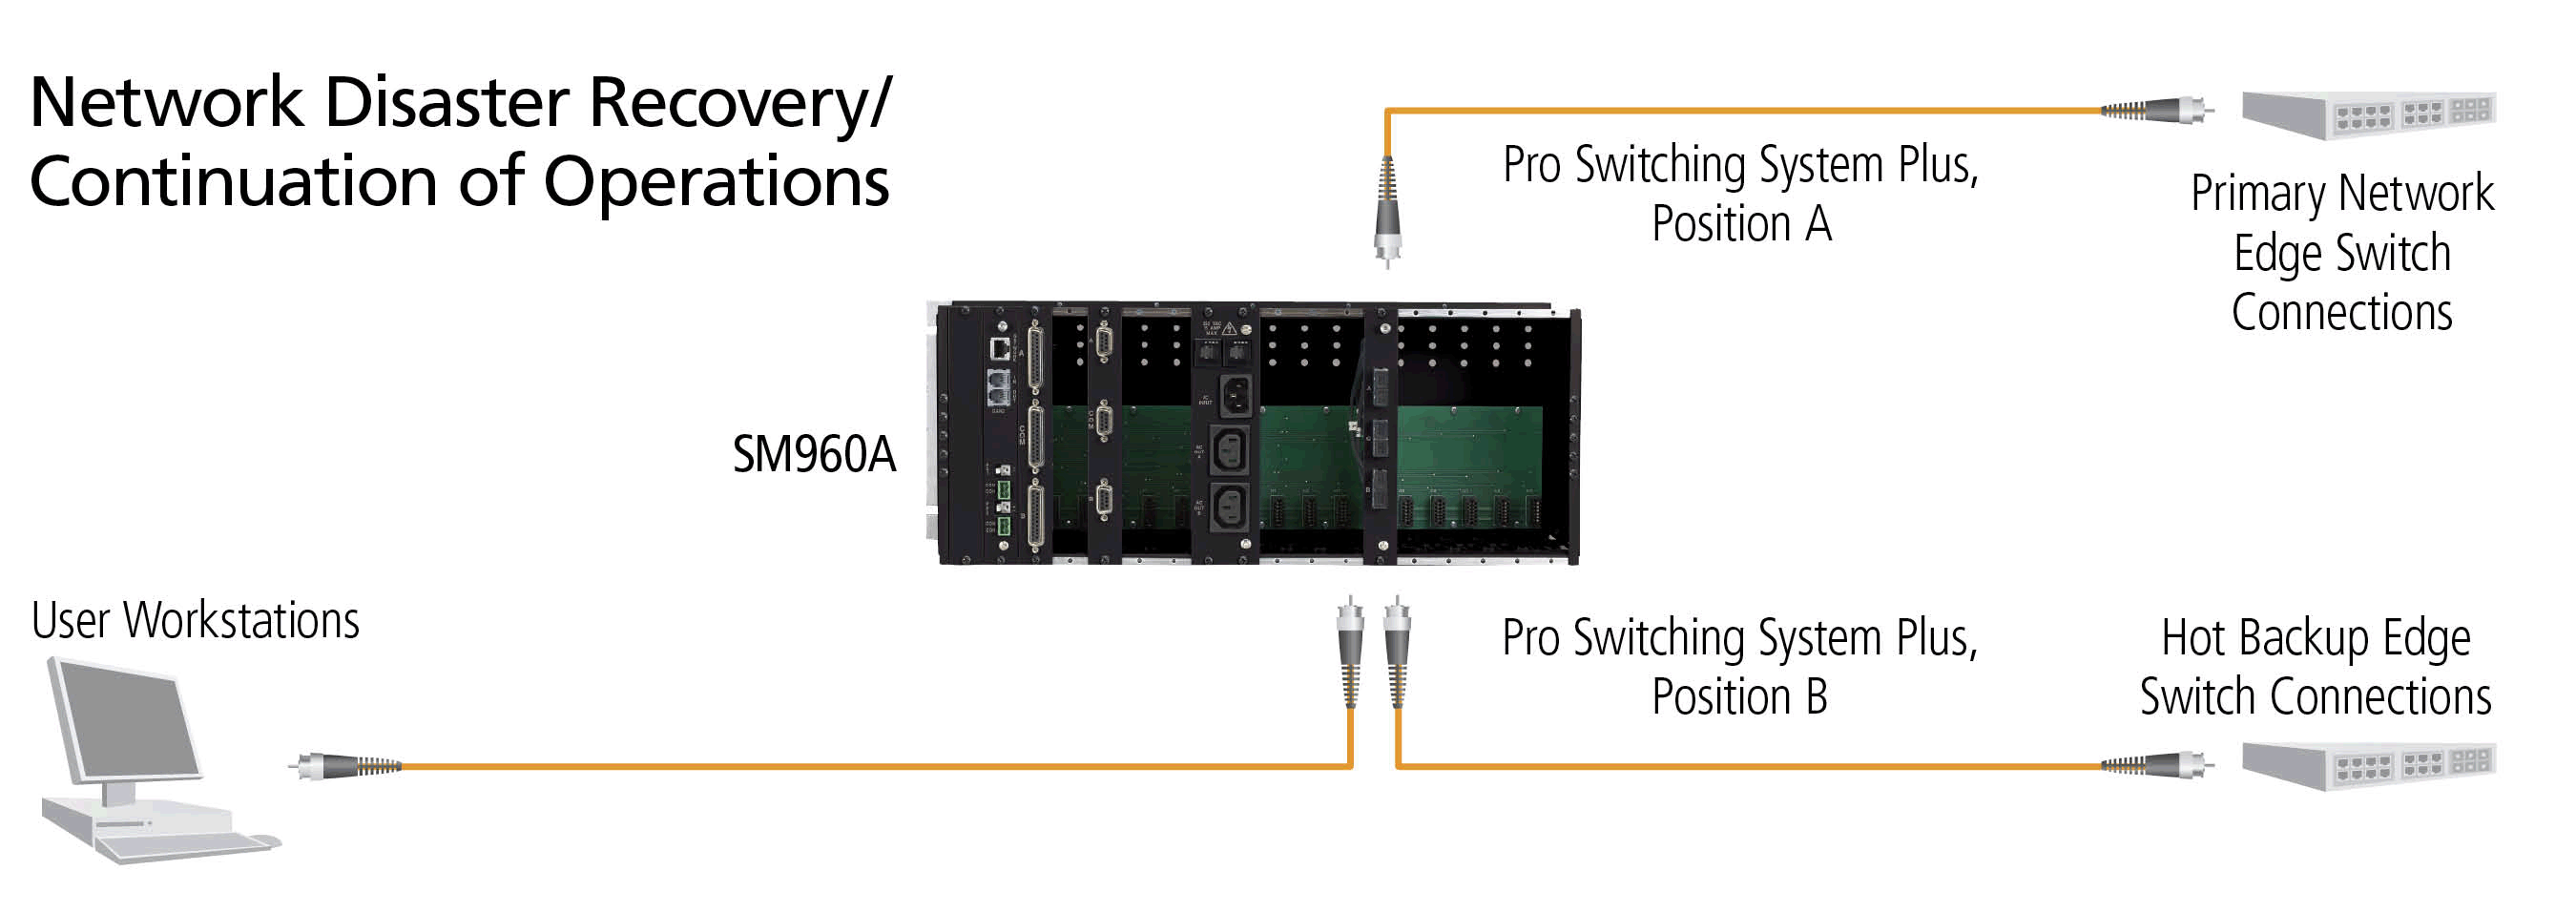 Pro Switching System Plus Diagramma applicativo